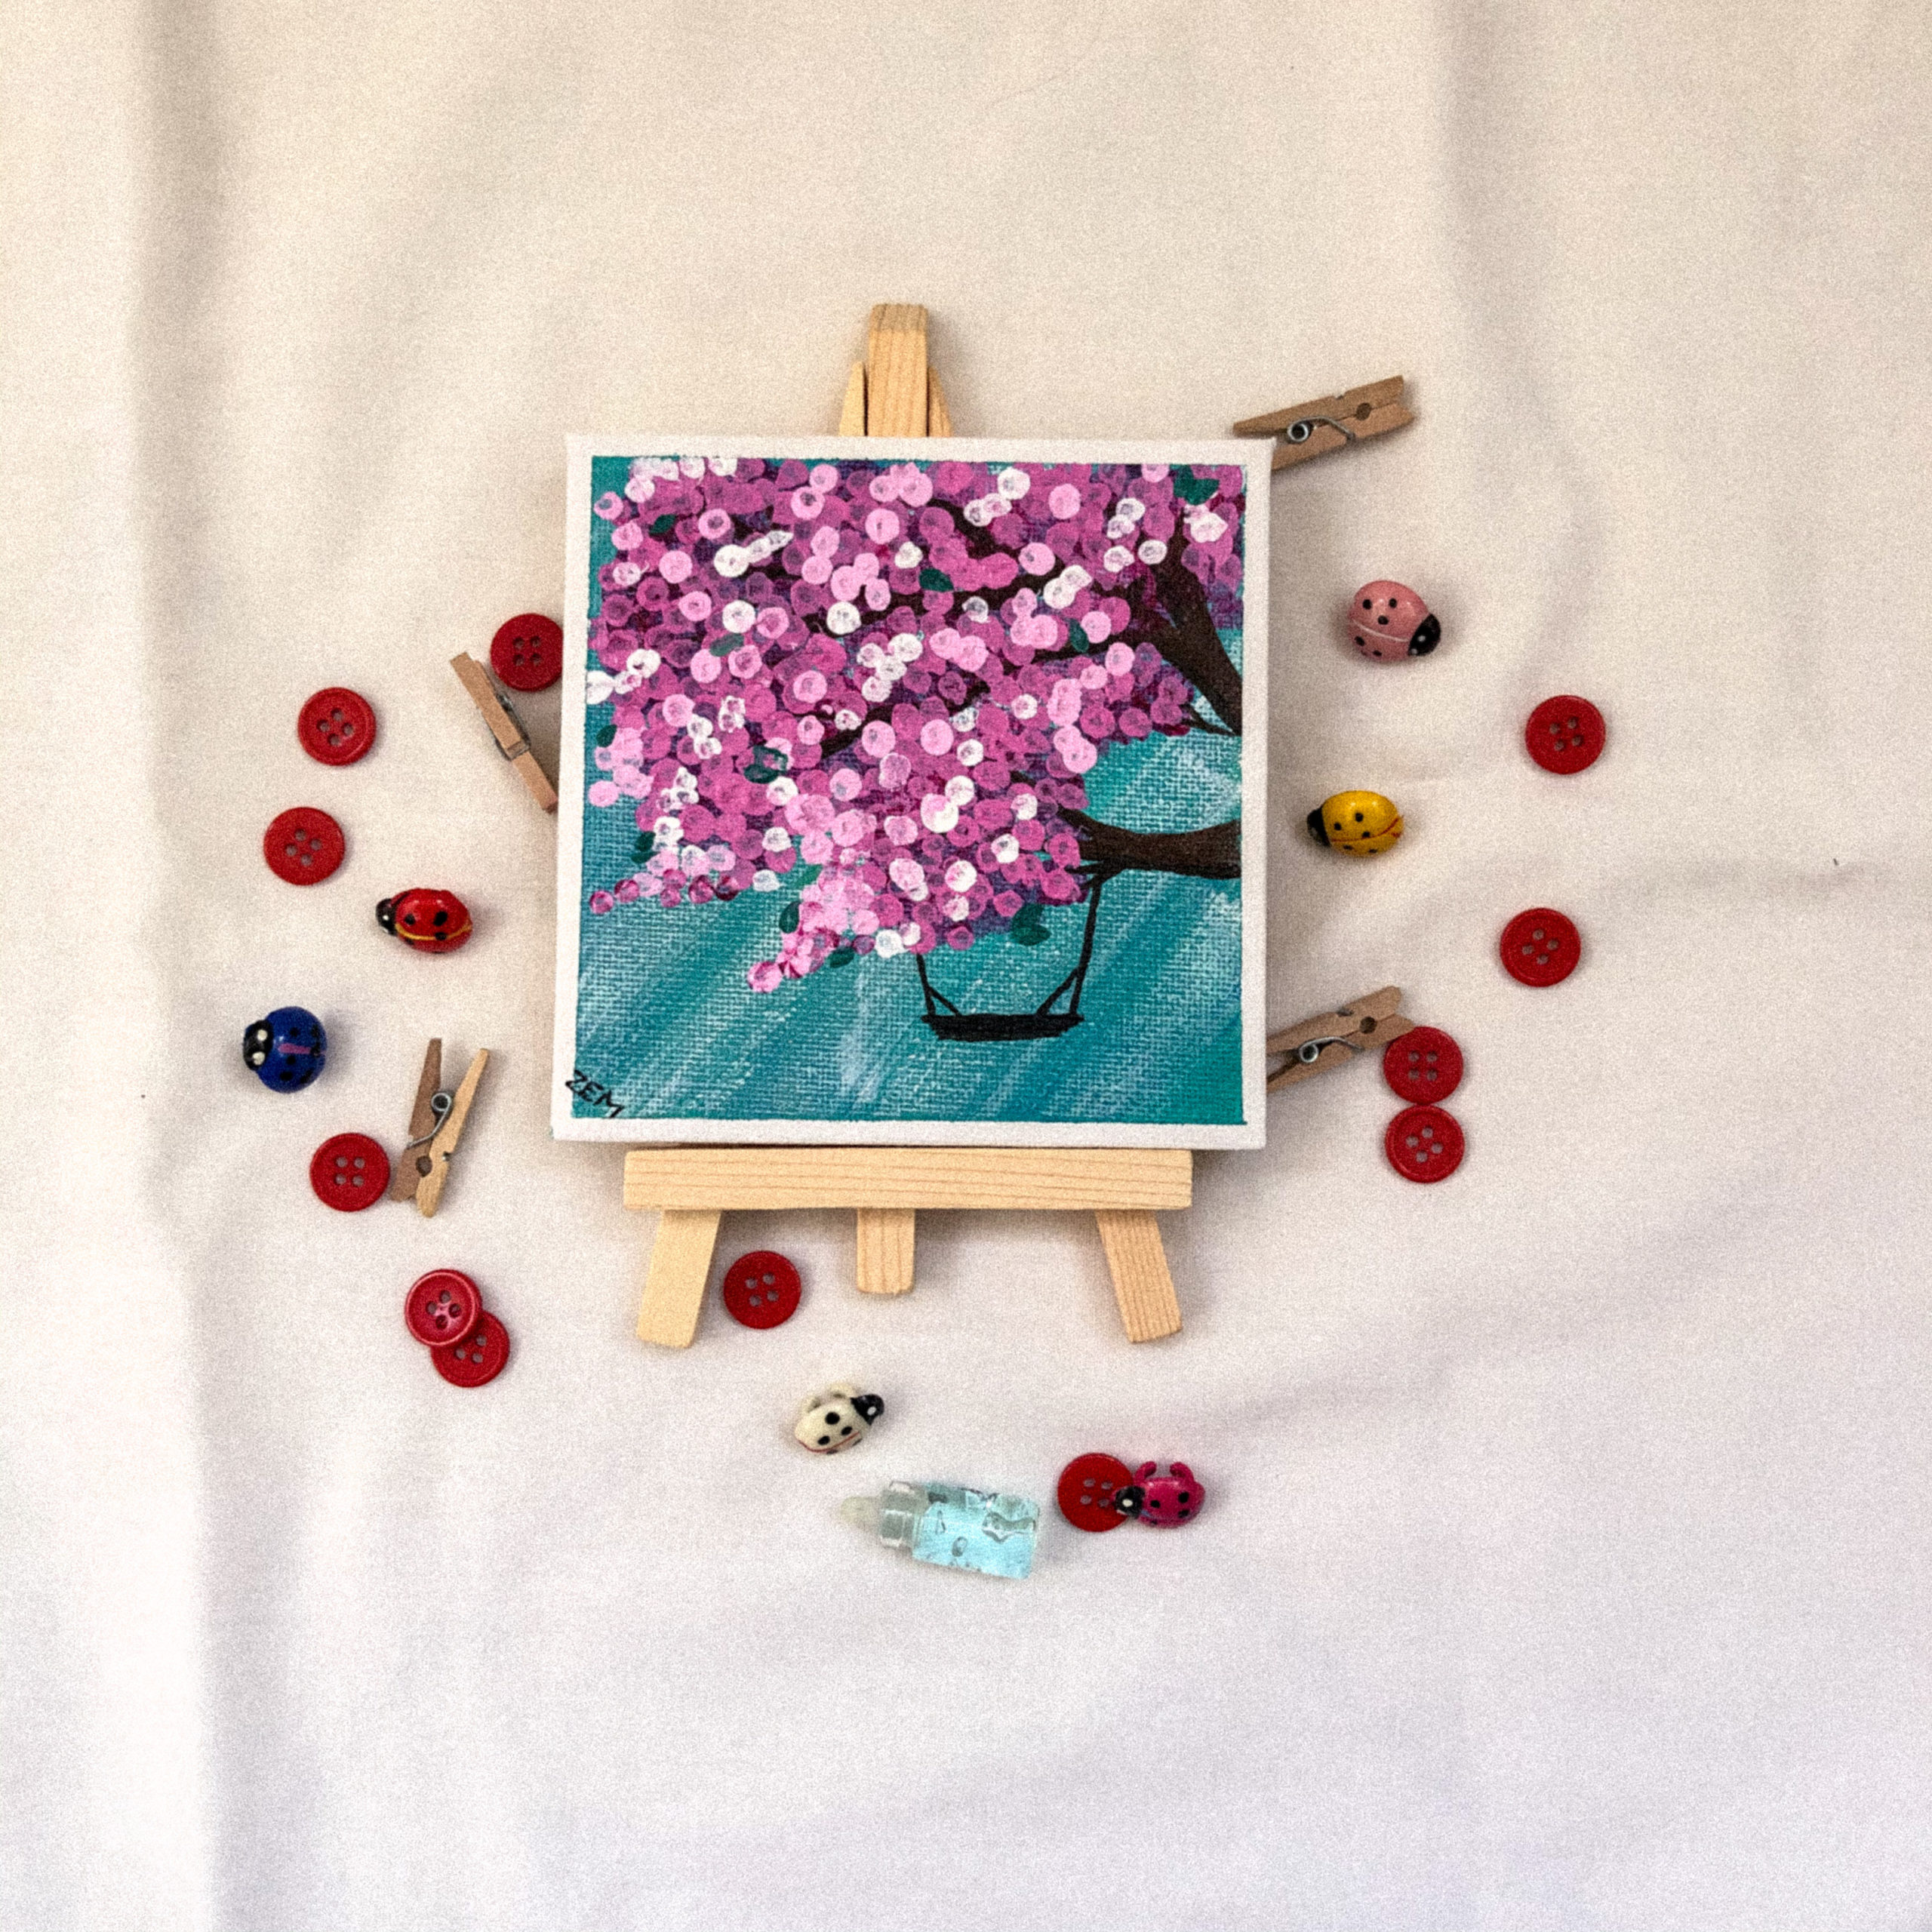 Cherry blossom » Fitoor Art